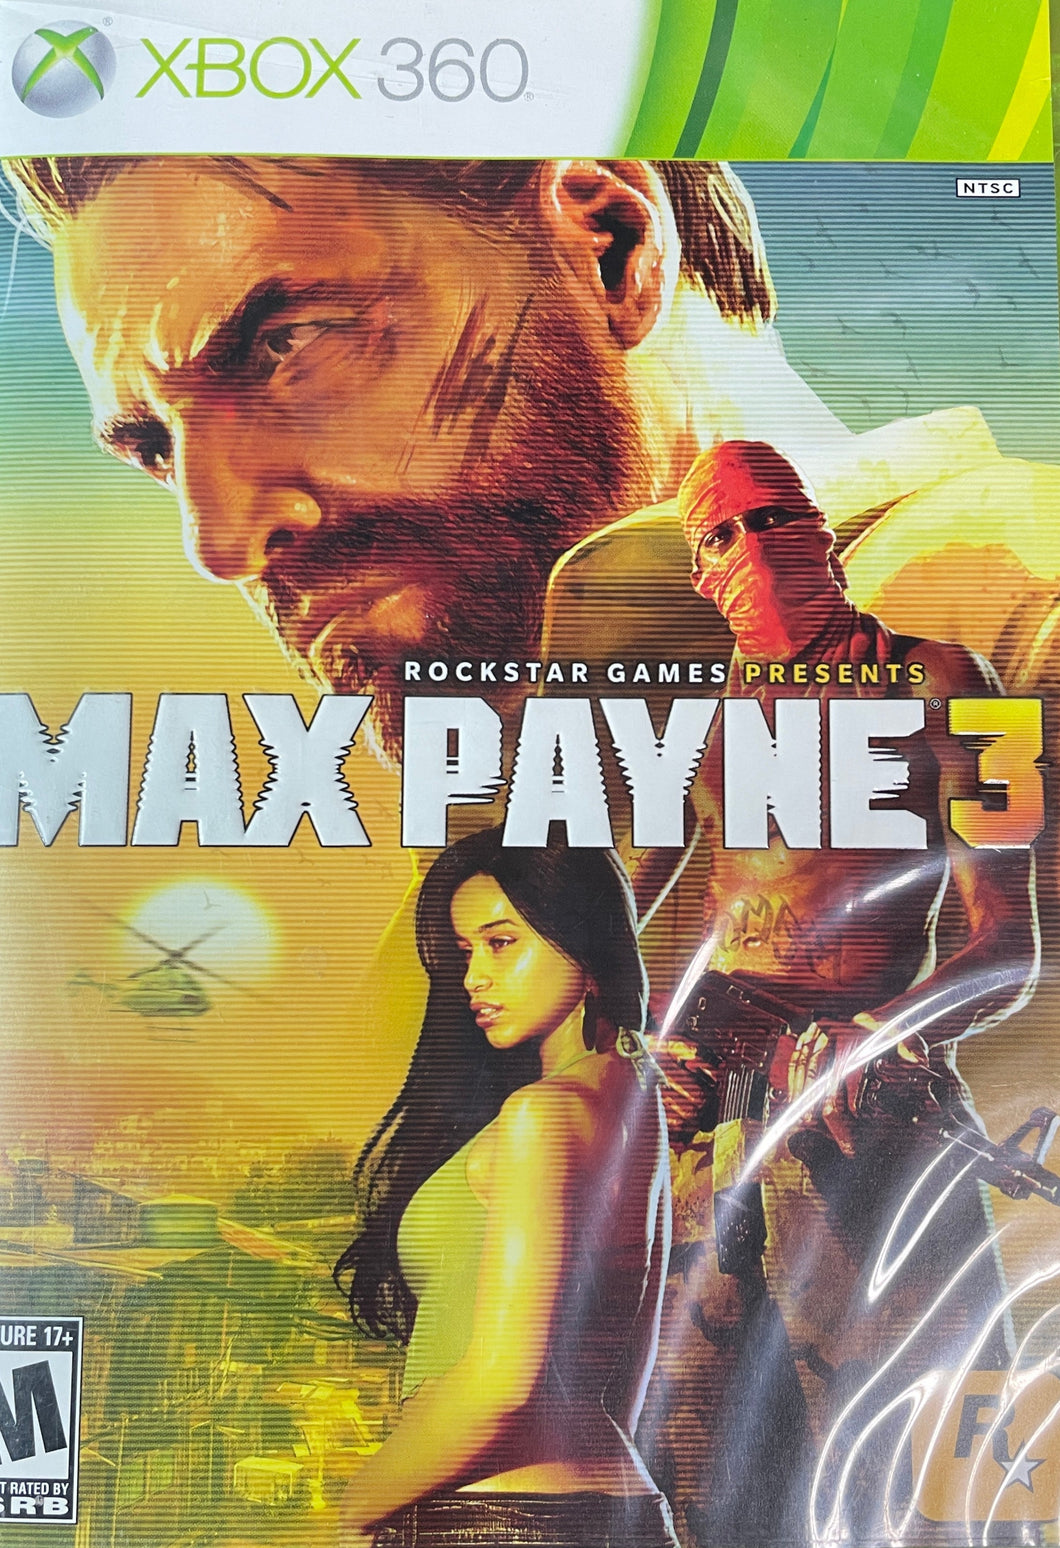 Max Payne 3 Xbox 360